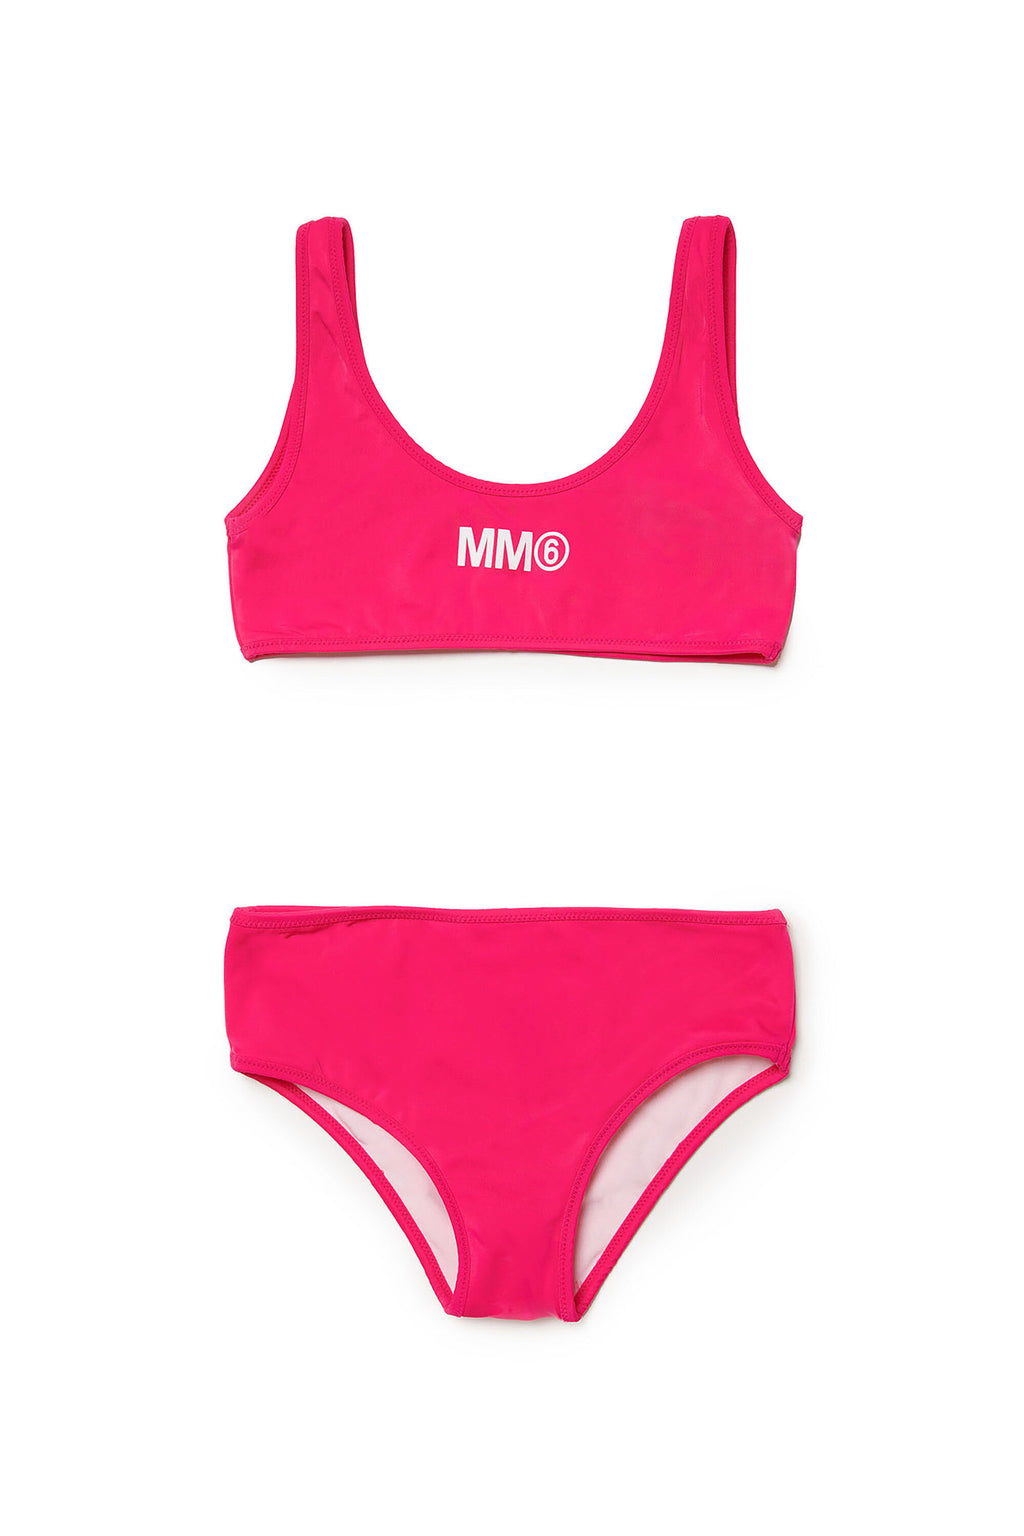 Costume bikini in lycra con logo MM6